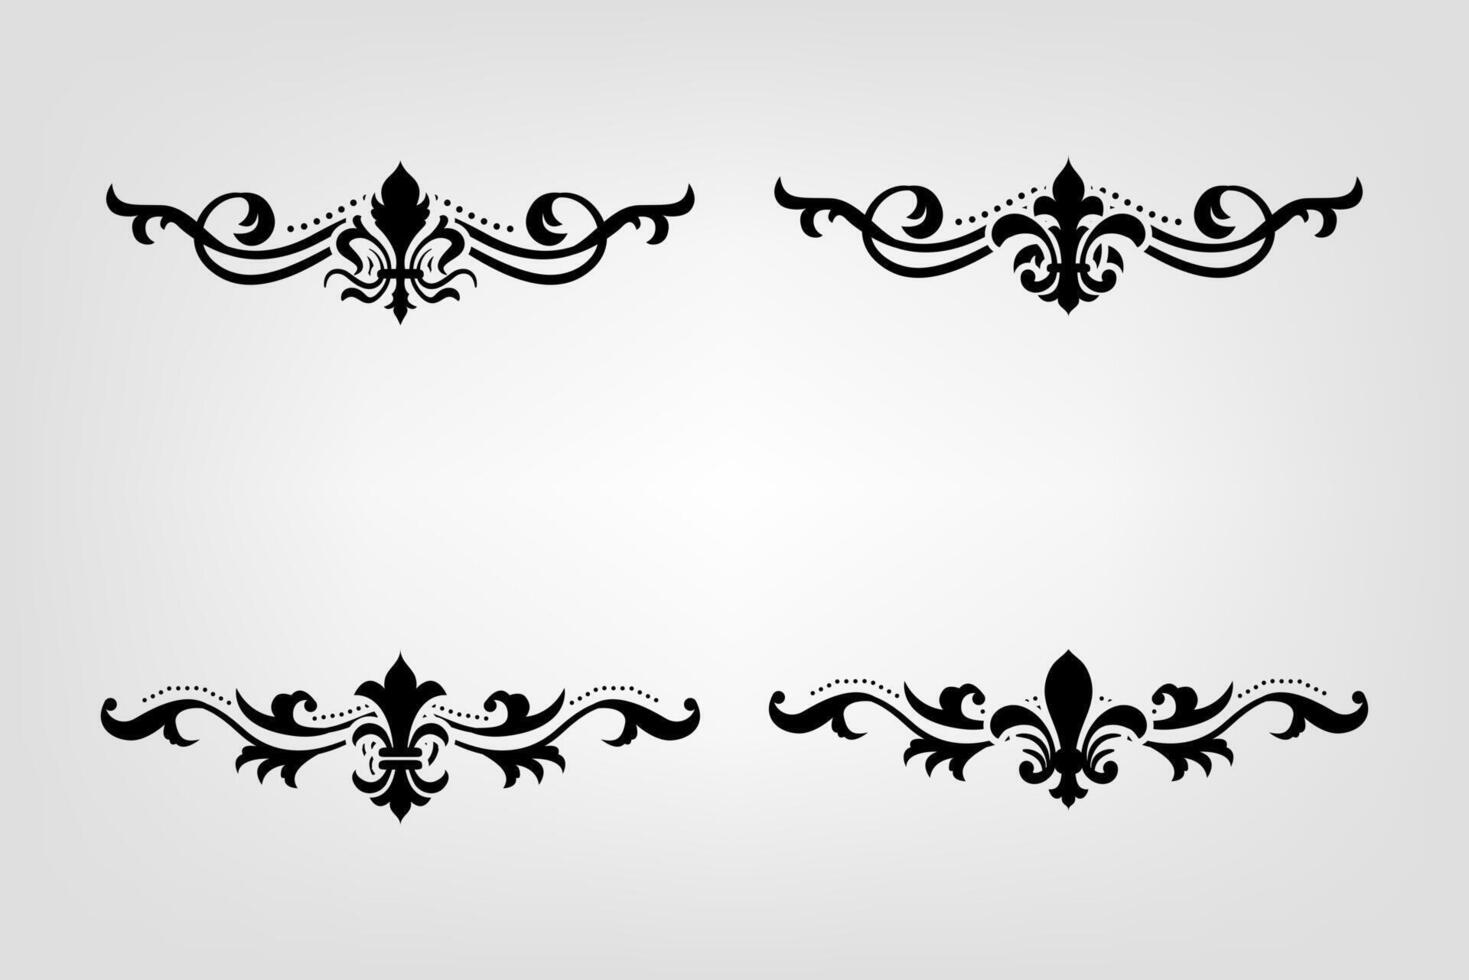 Text separator Baroque decoratice divider book typography ornament design elements vintage dividing shapes Border illustration vector